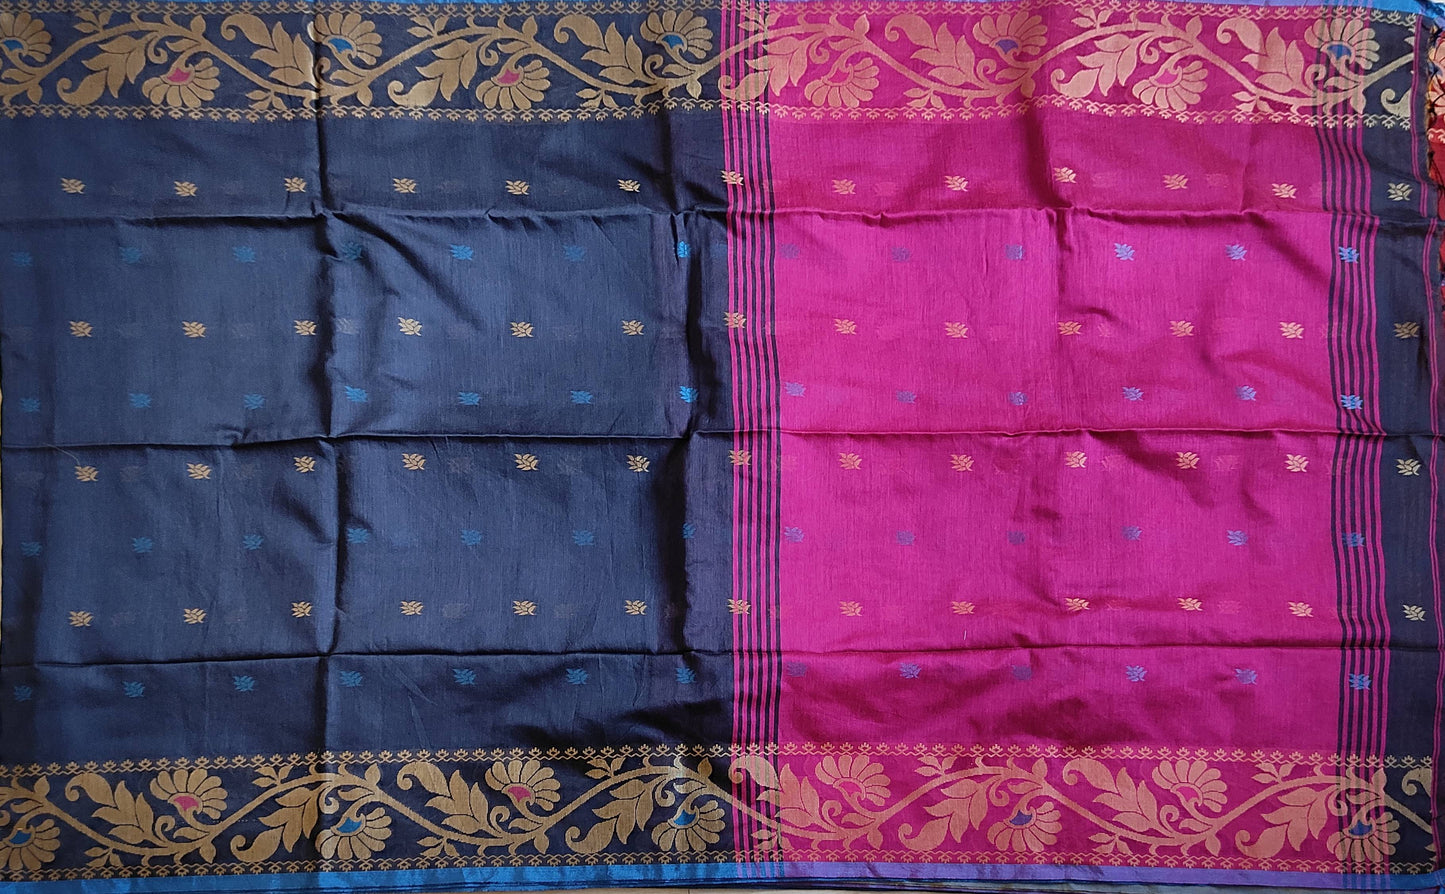 Pradip Fabrics Woven Grey and Pink Color Soft Handloom Saree